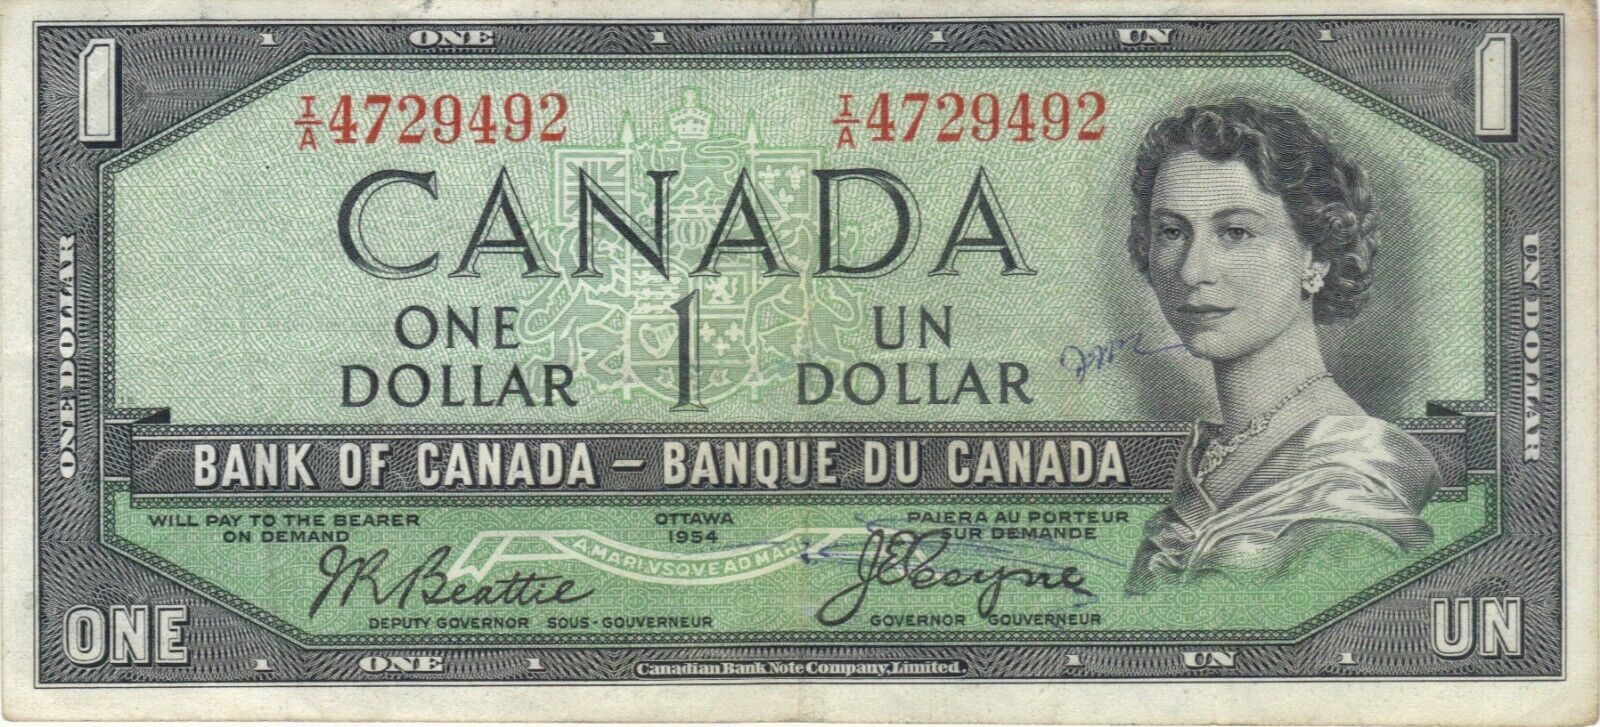 1954 $1 One Dollar Queen Elizabeth Ii Canada Currency Devil's Face Banknote Bill